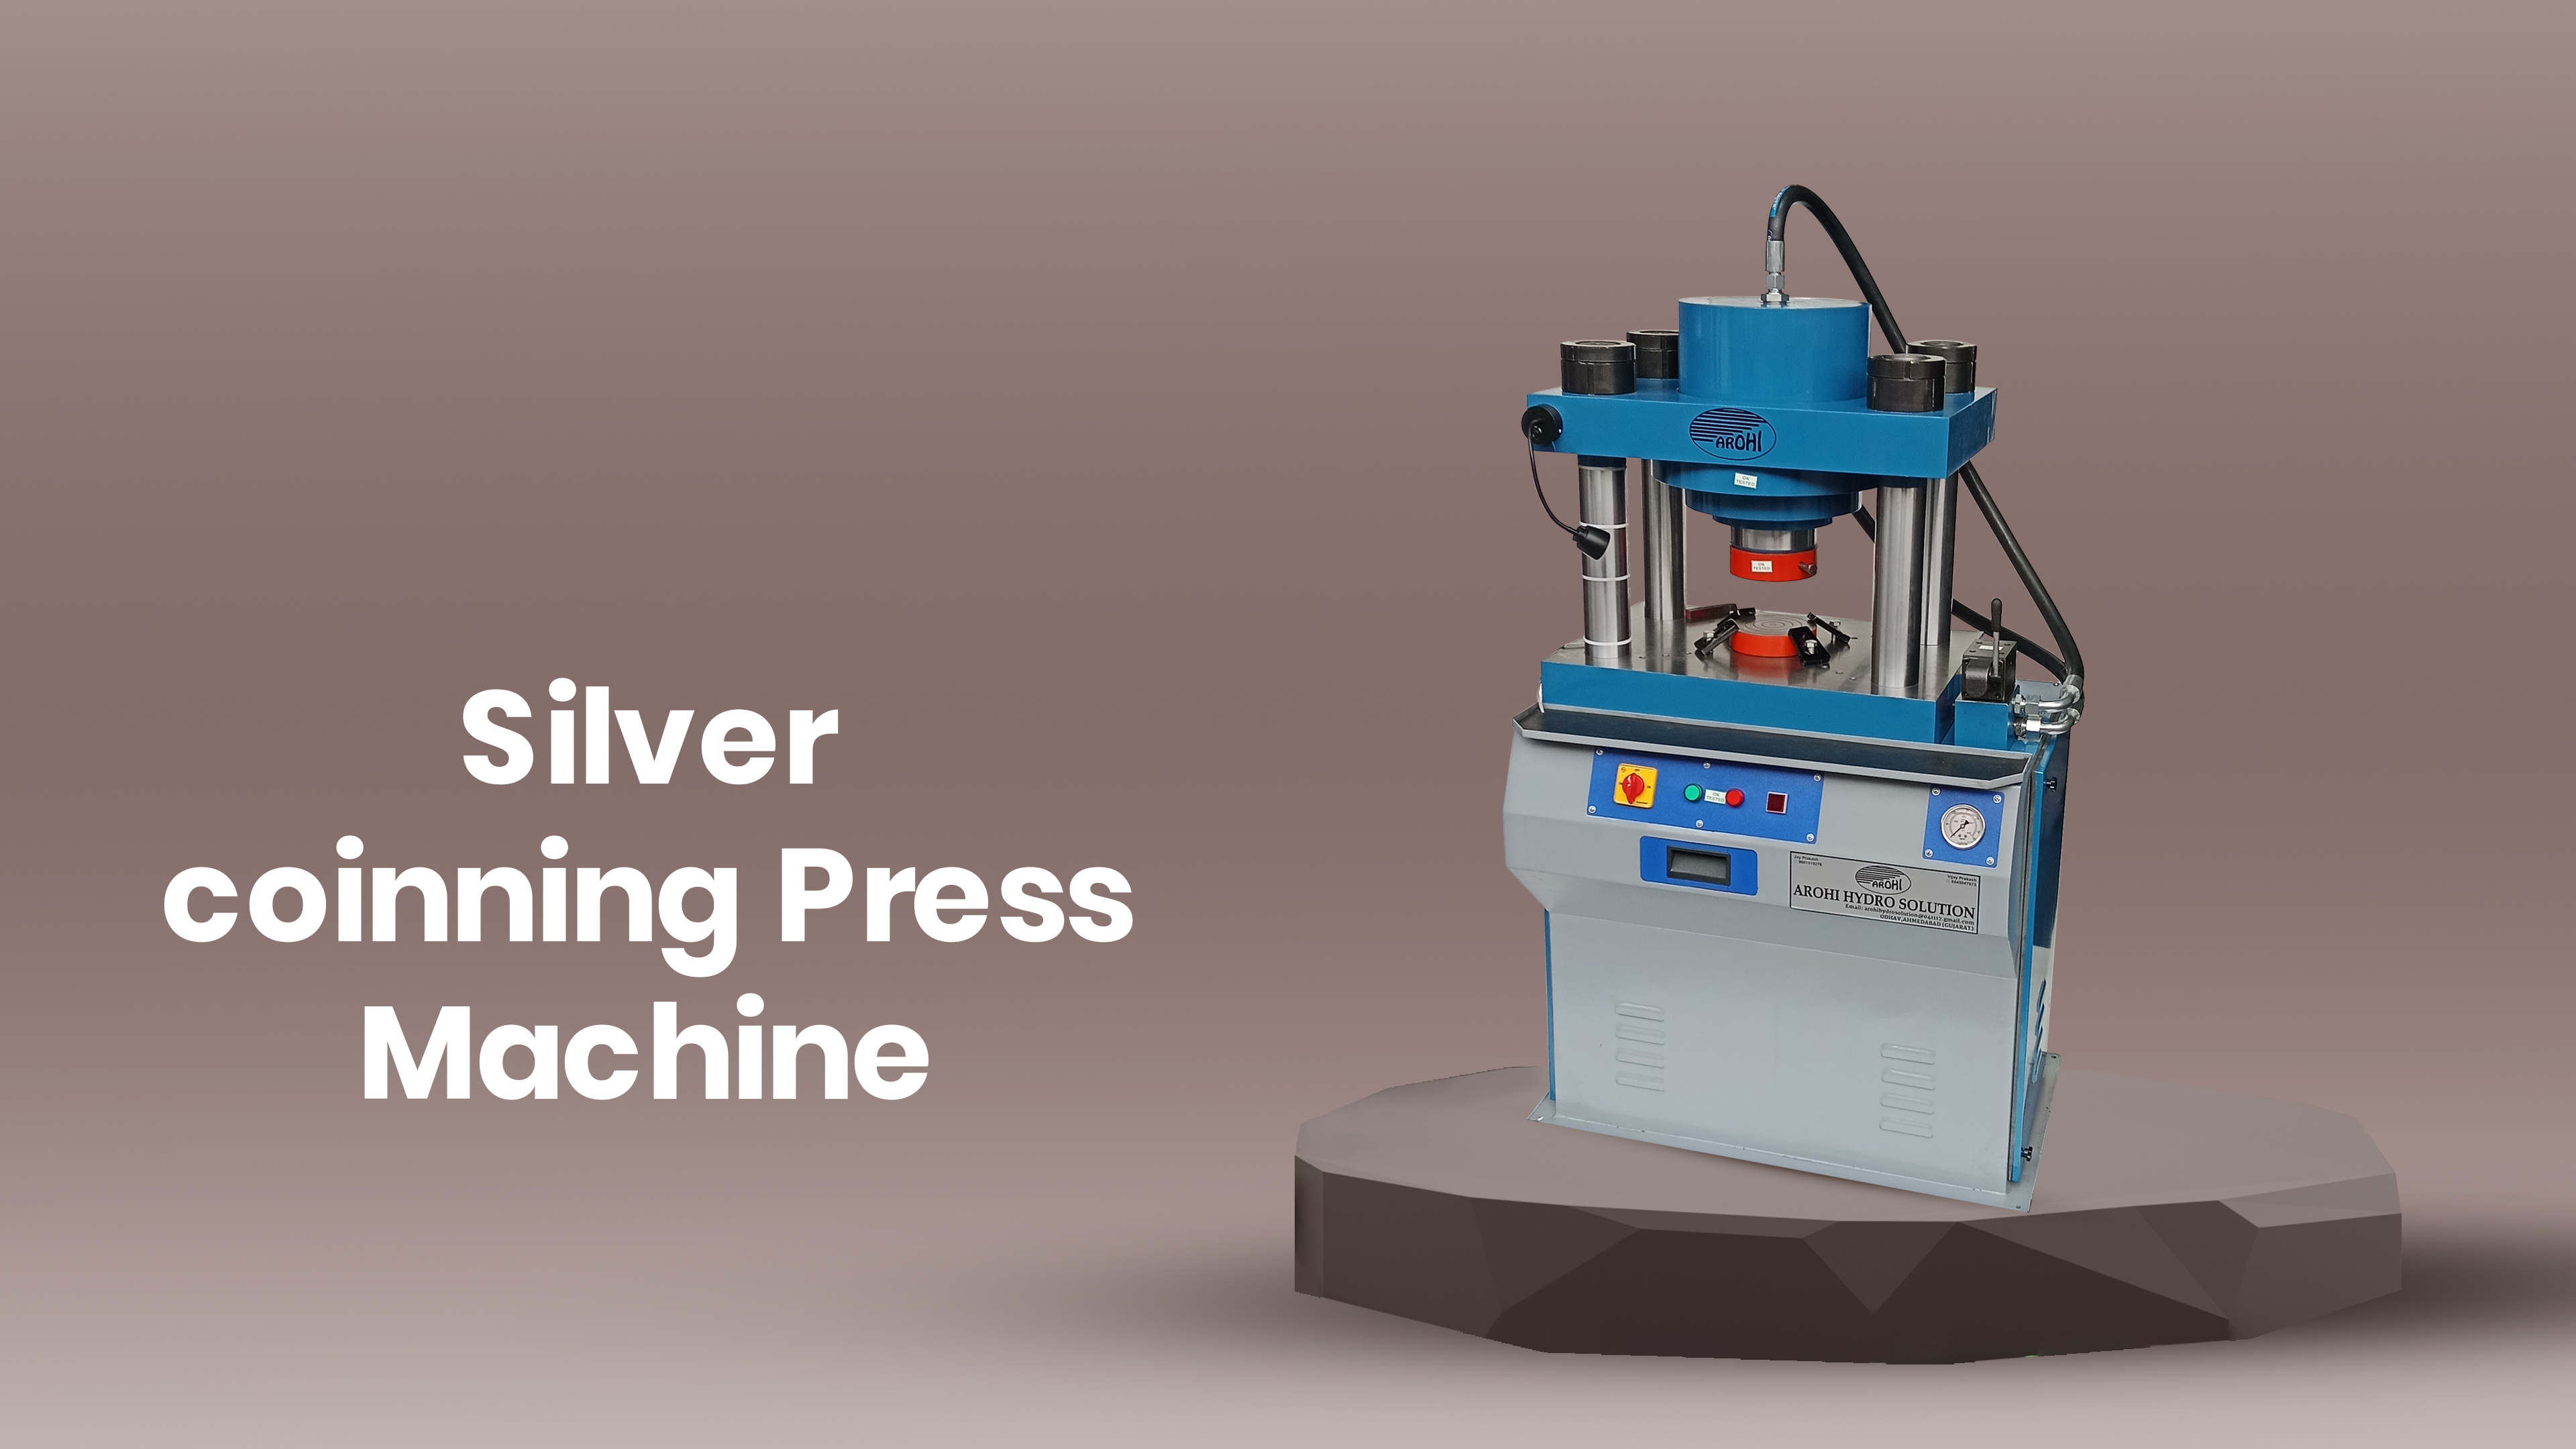 Silver coinning Press Machine